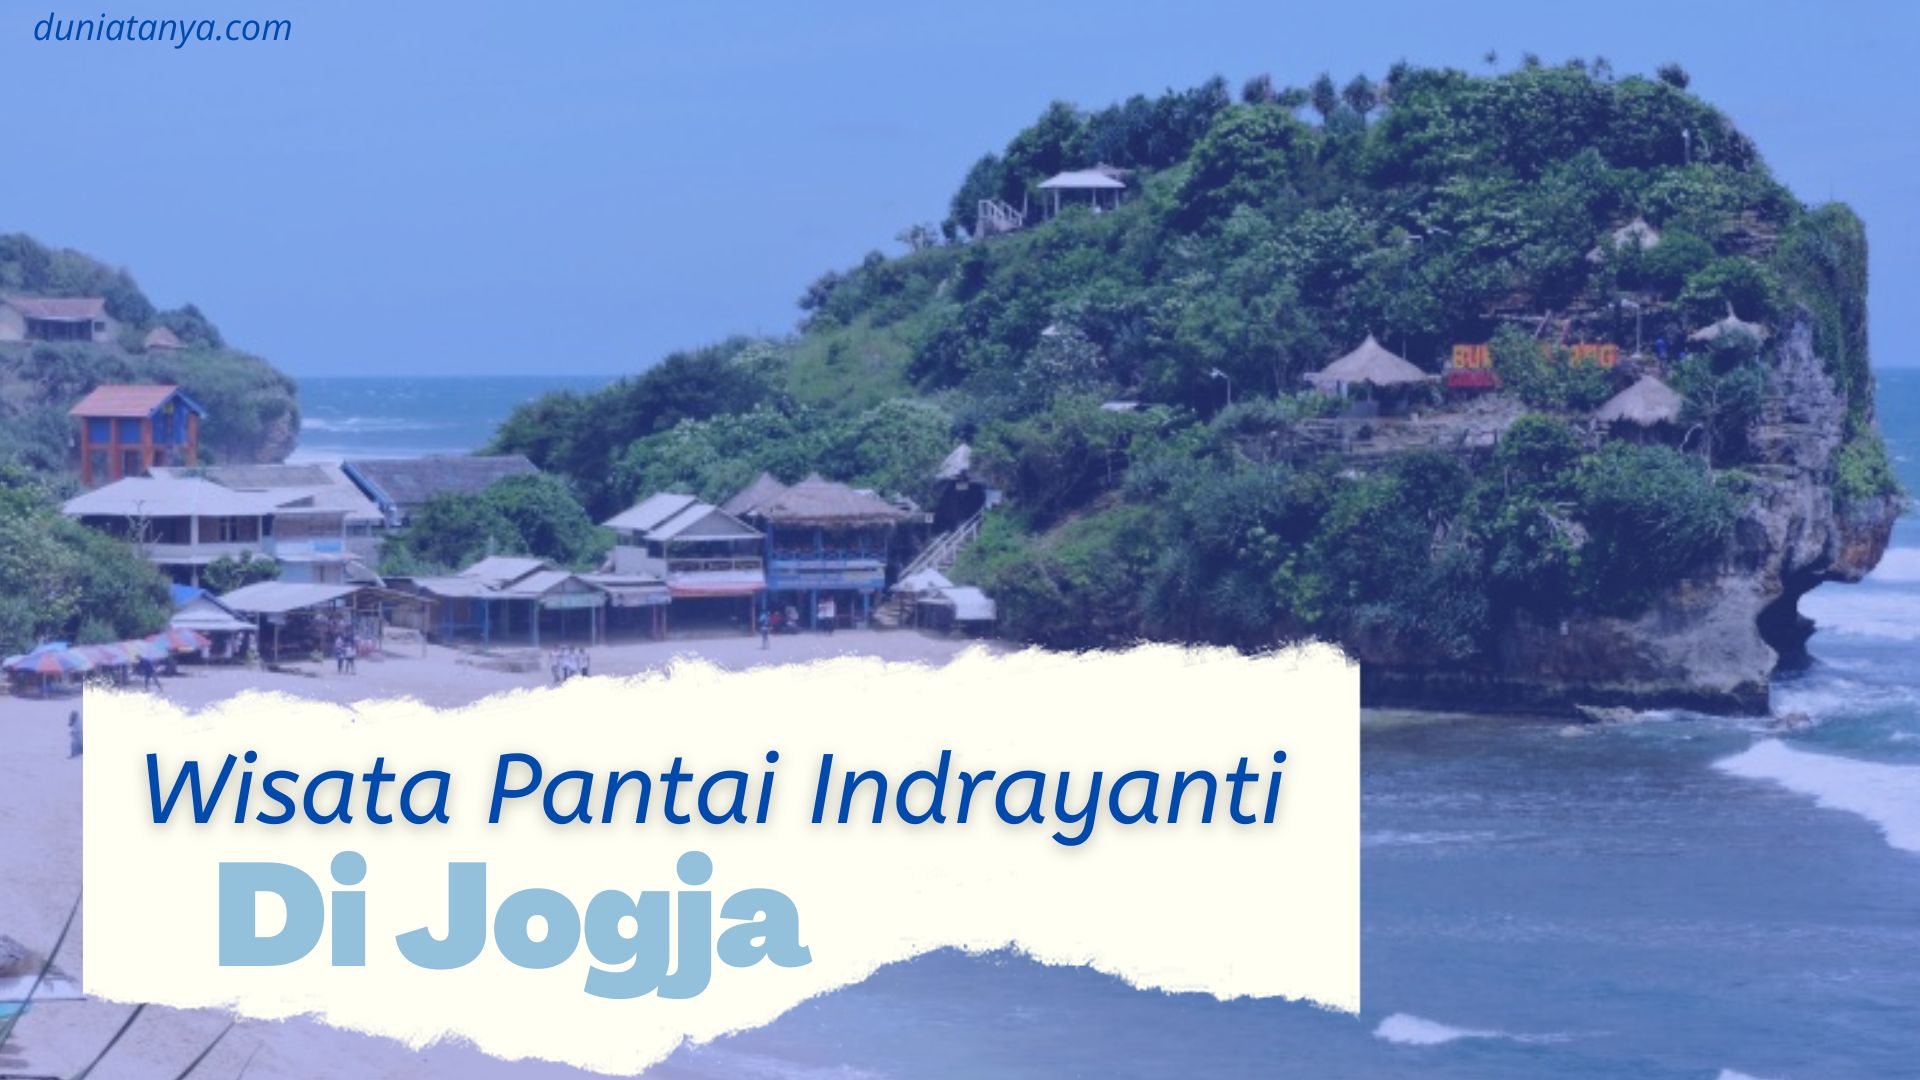 You are currently viewing Wisata Pantai Indrayanti Di Jogja